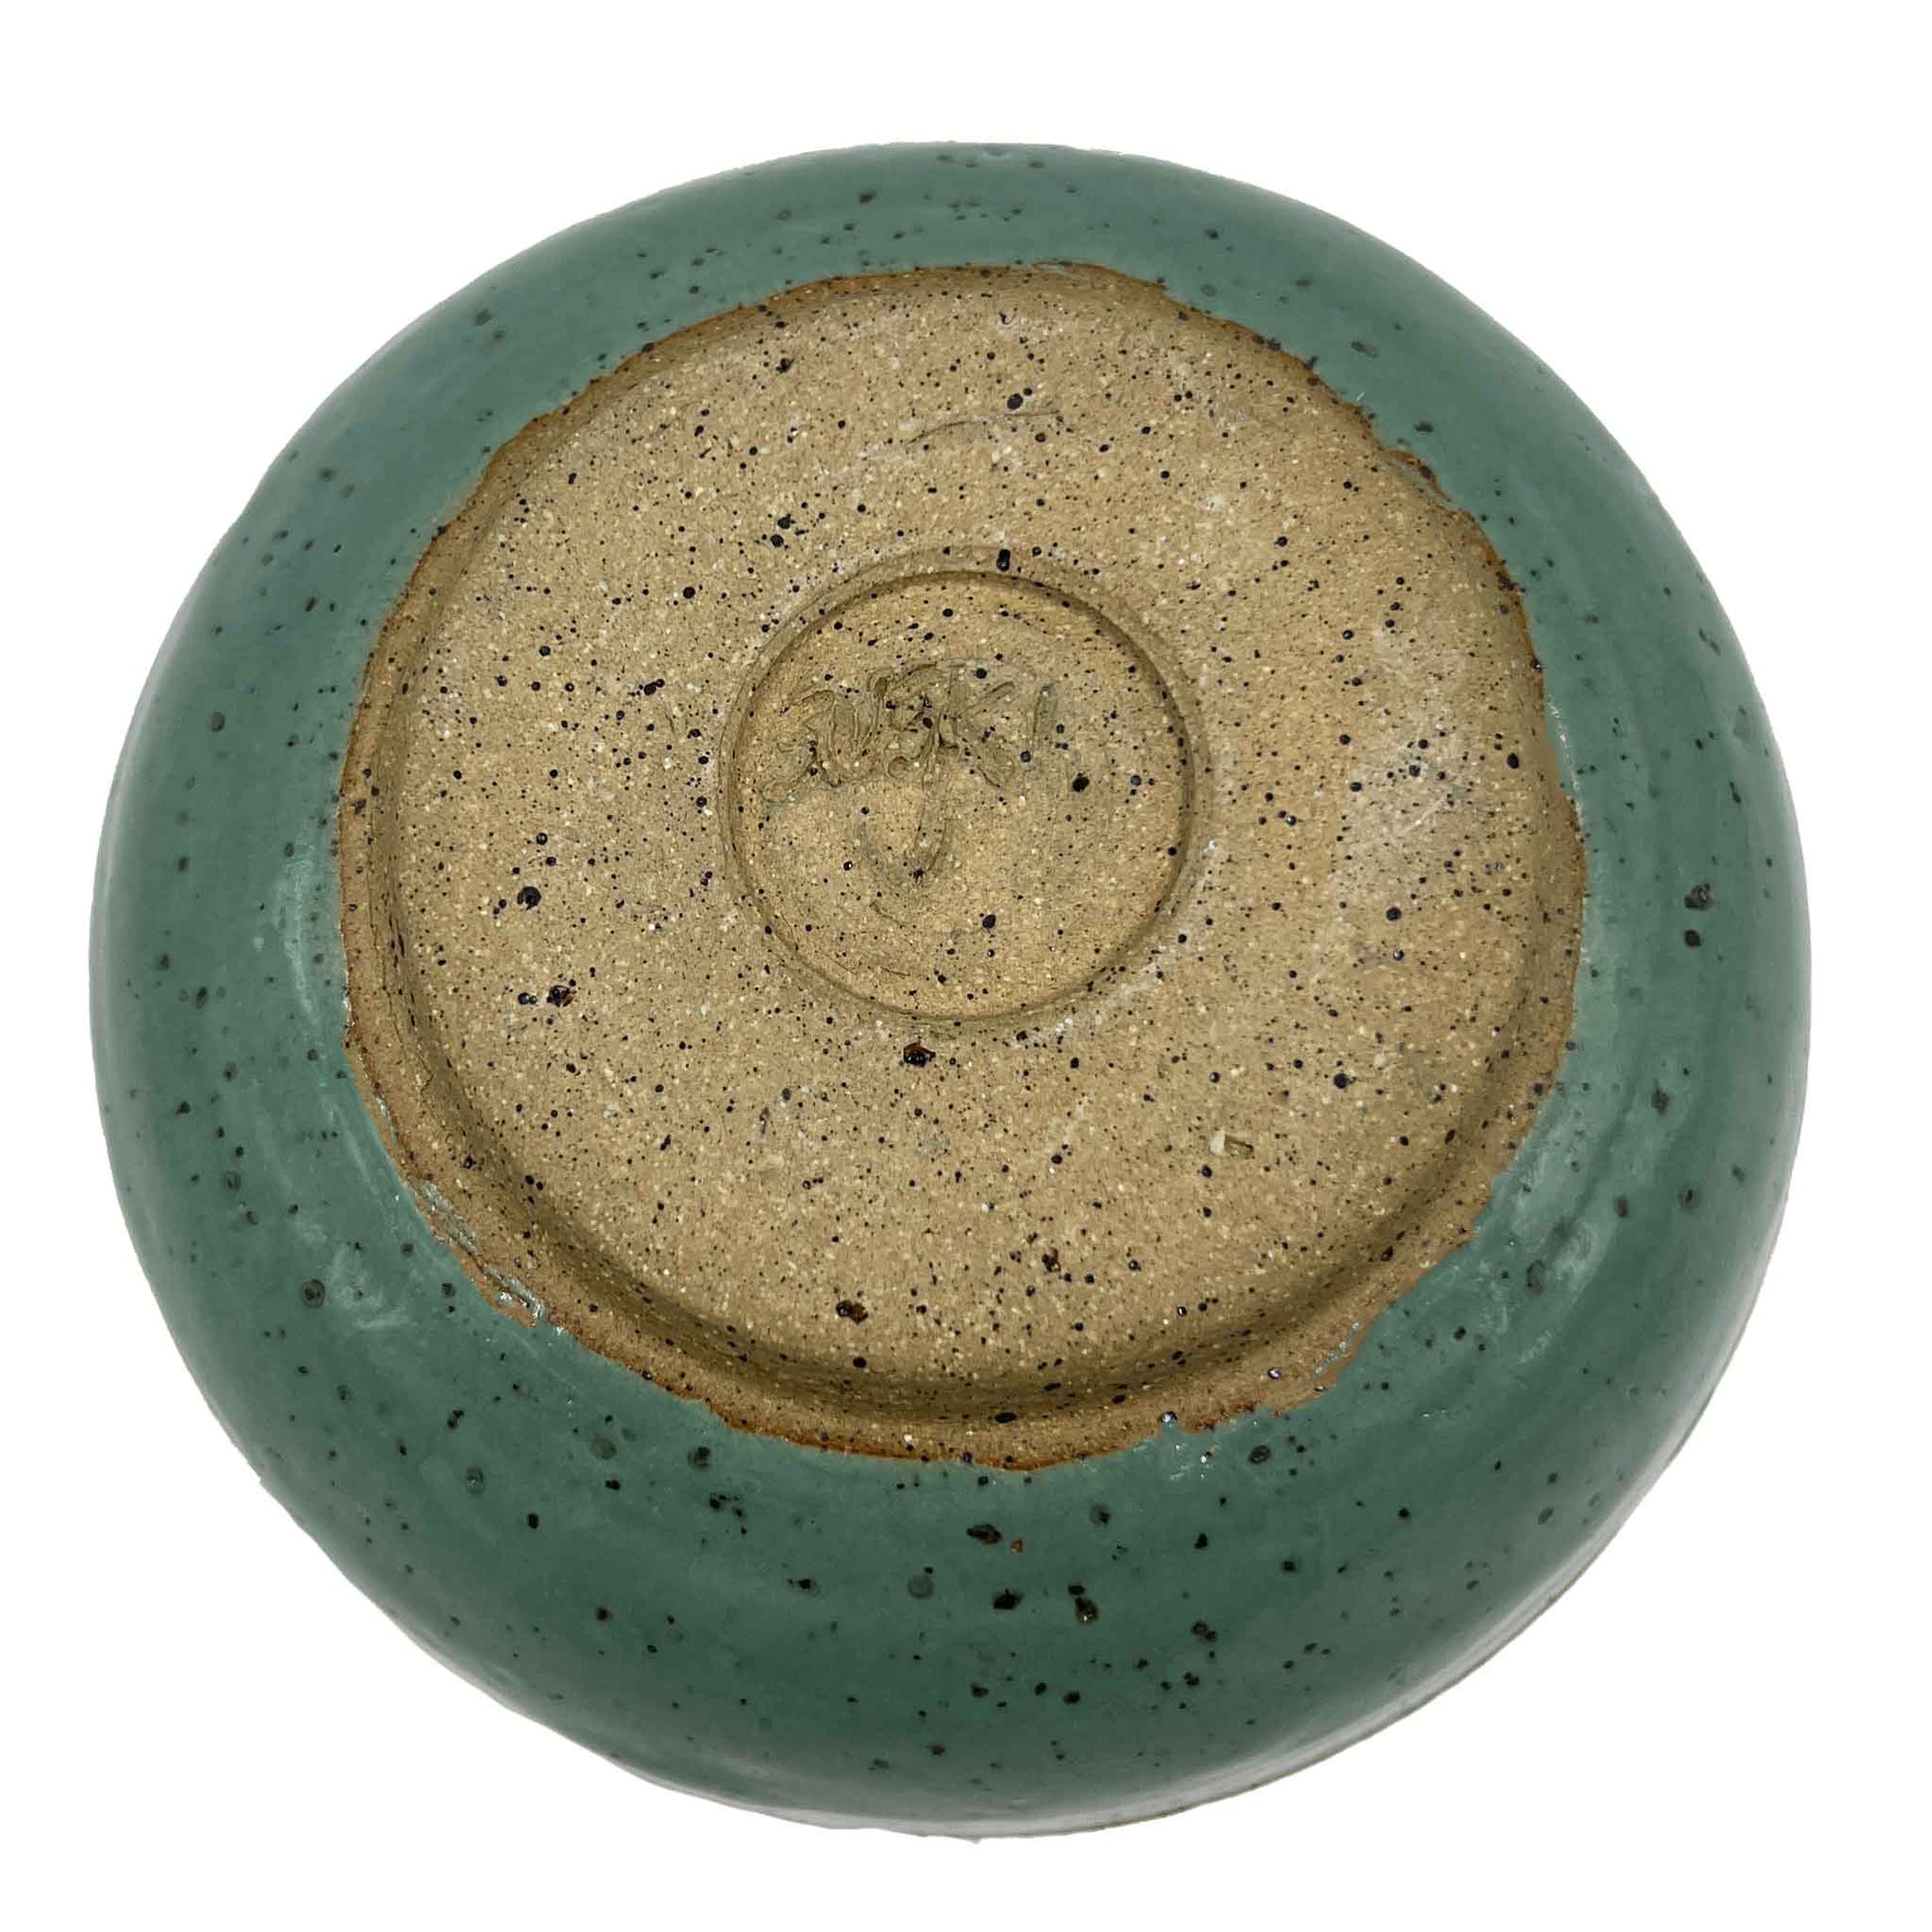 Bottom of SAS Seahorse Hand Painted Stoneware Bowl